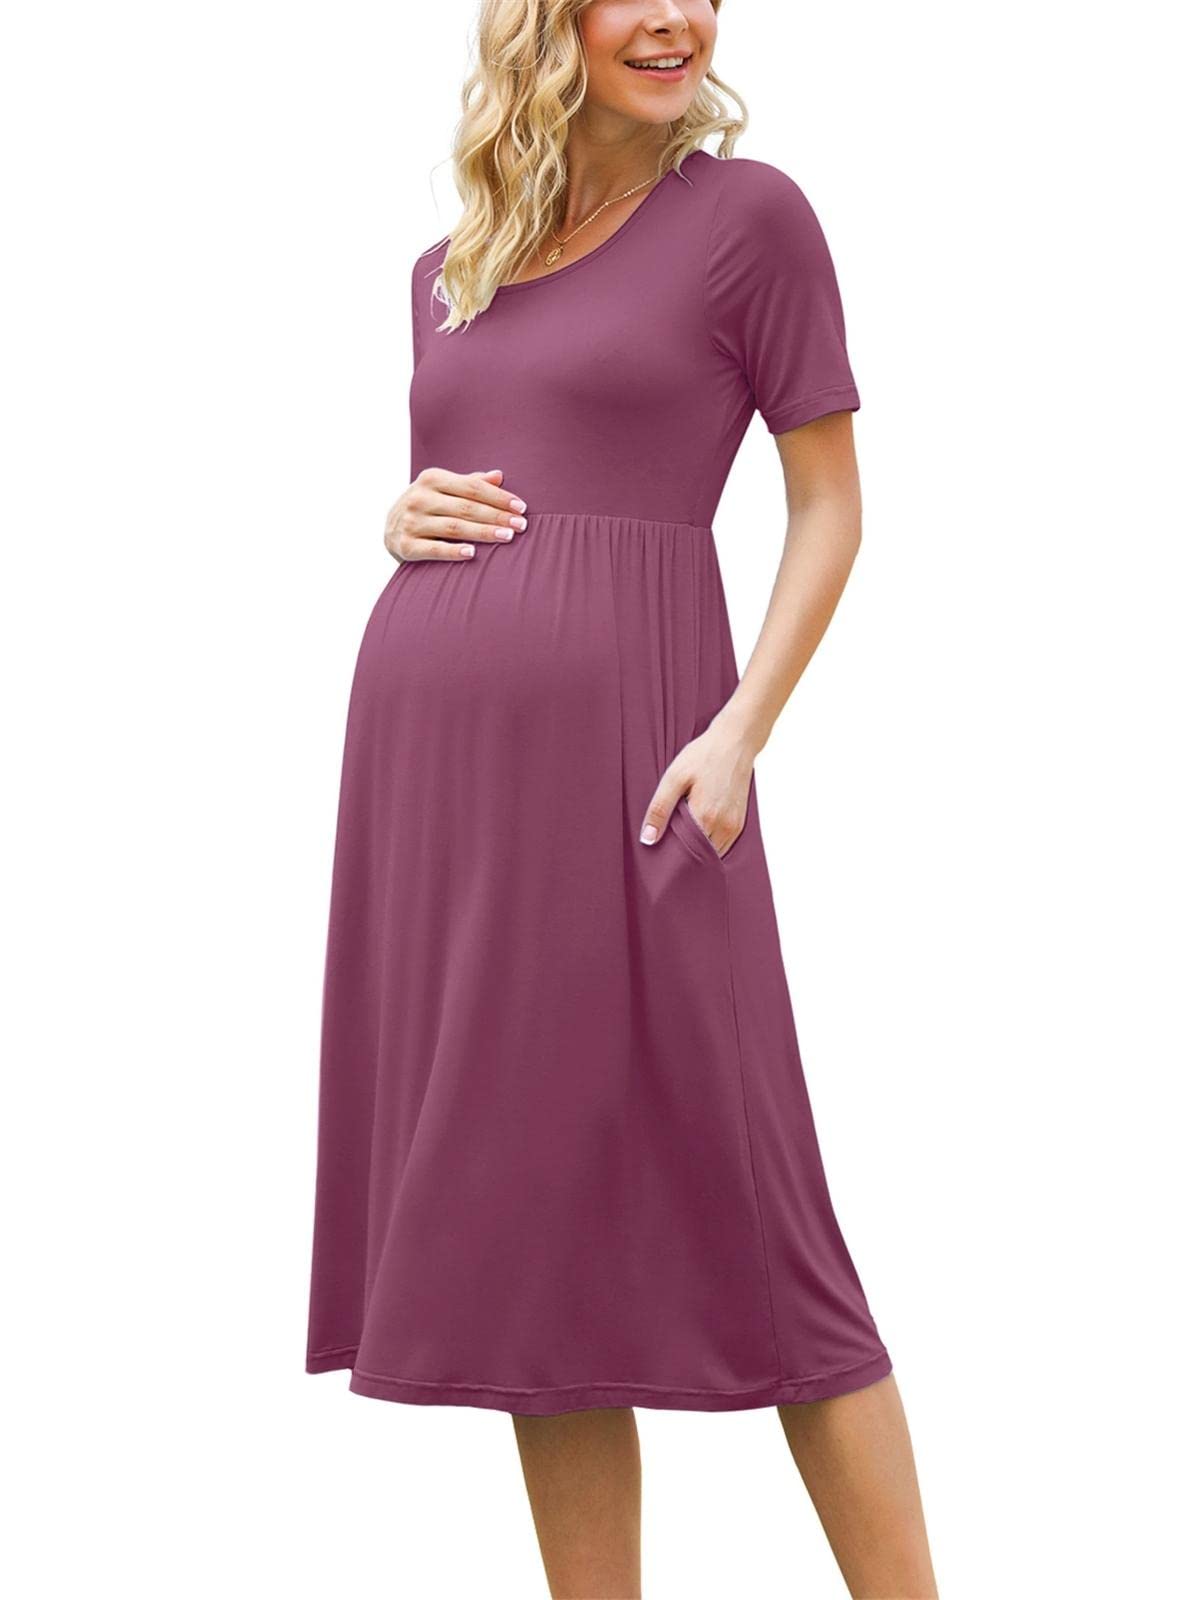 Xpenyo Womens Casual Short Sleeve Empire Waist Maternity Dress Midi Pregnancy Dress With Pockets Purplish Red Xl